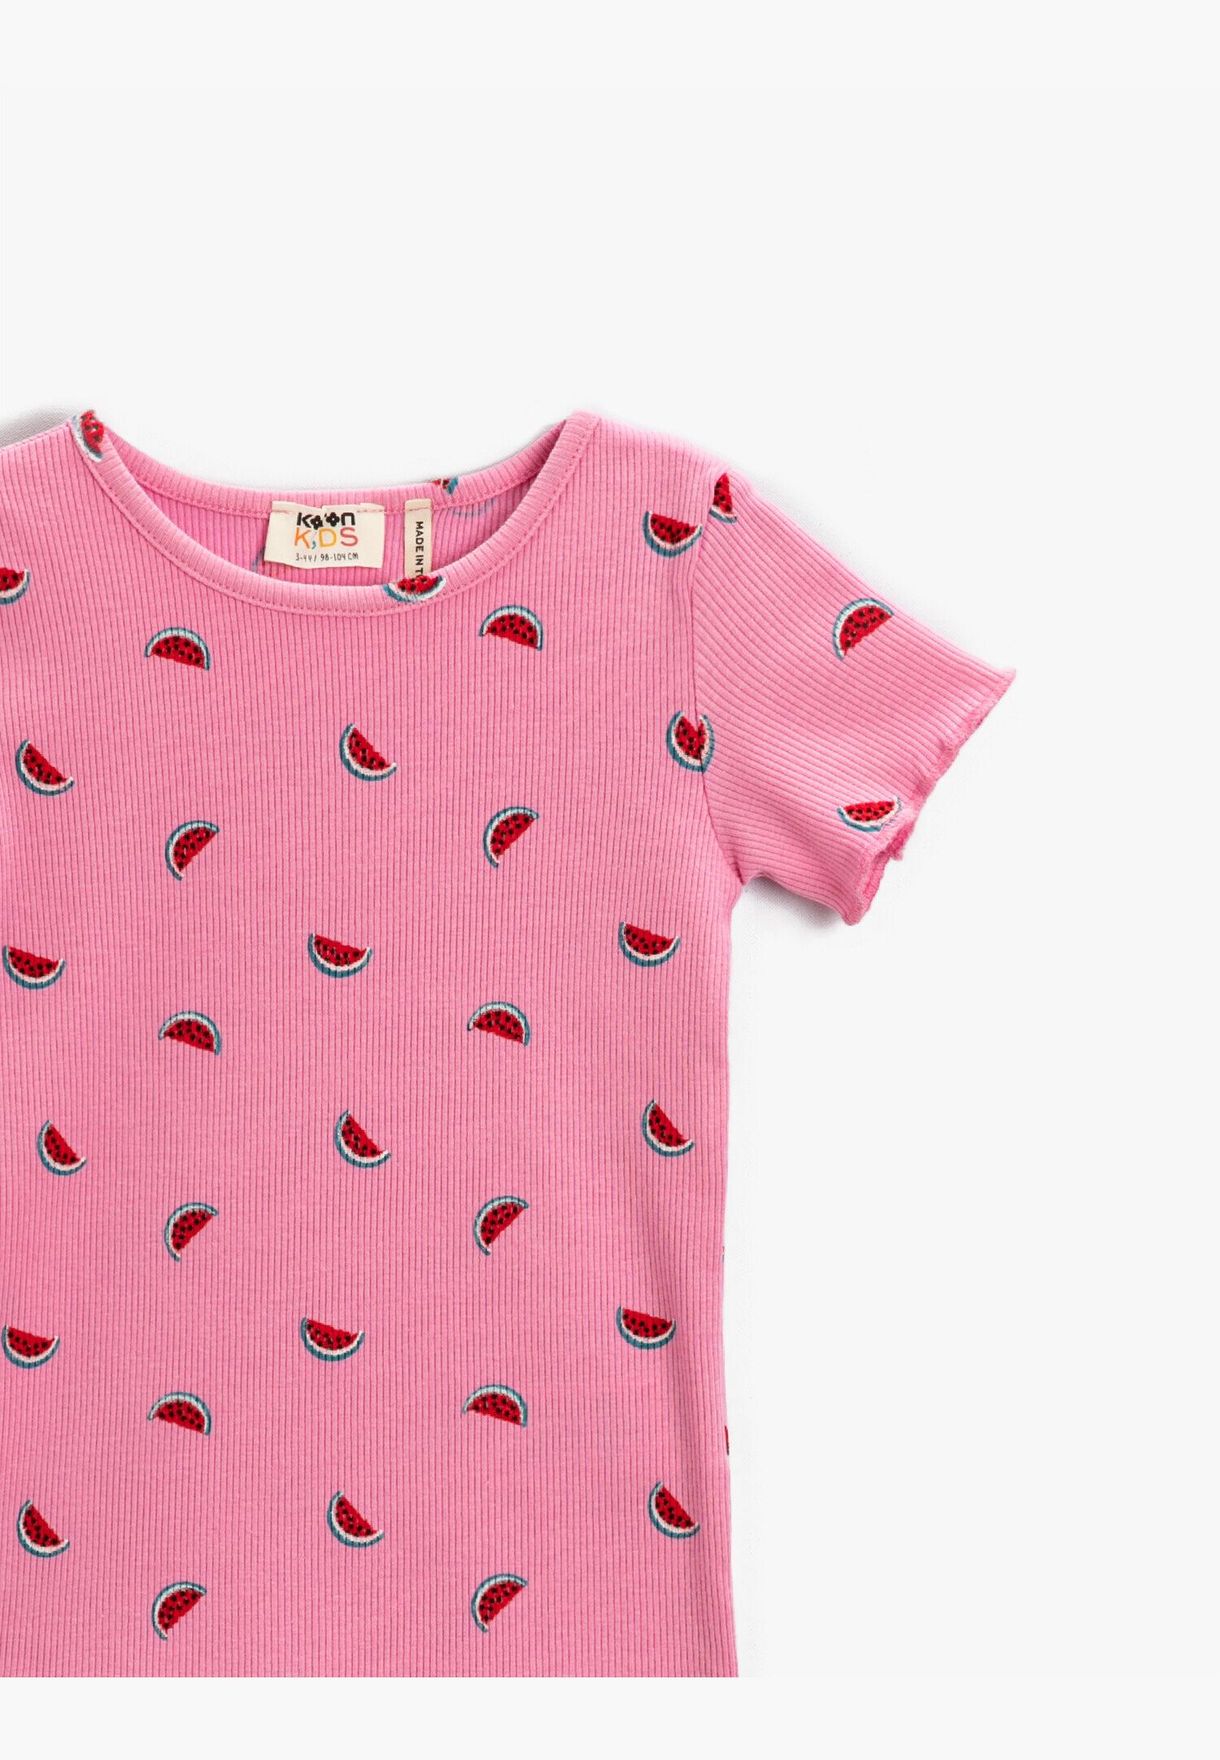 Watermelon Printed Short Sleeve T-Shirt Cotton